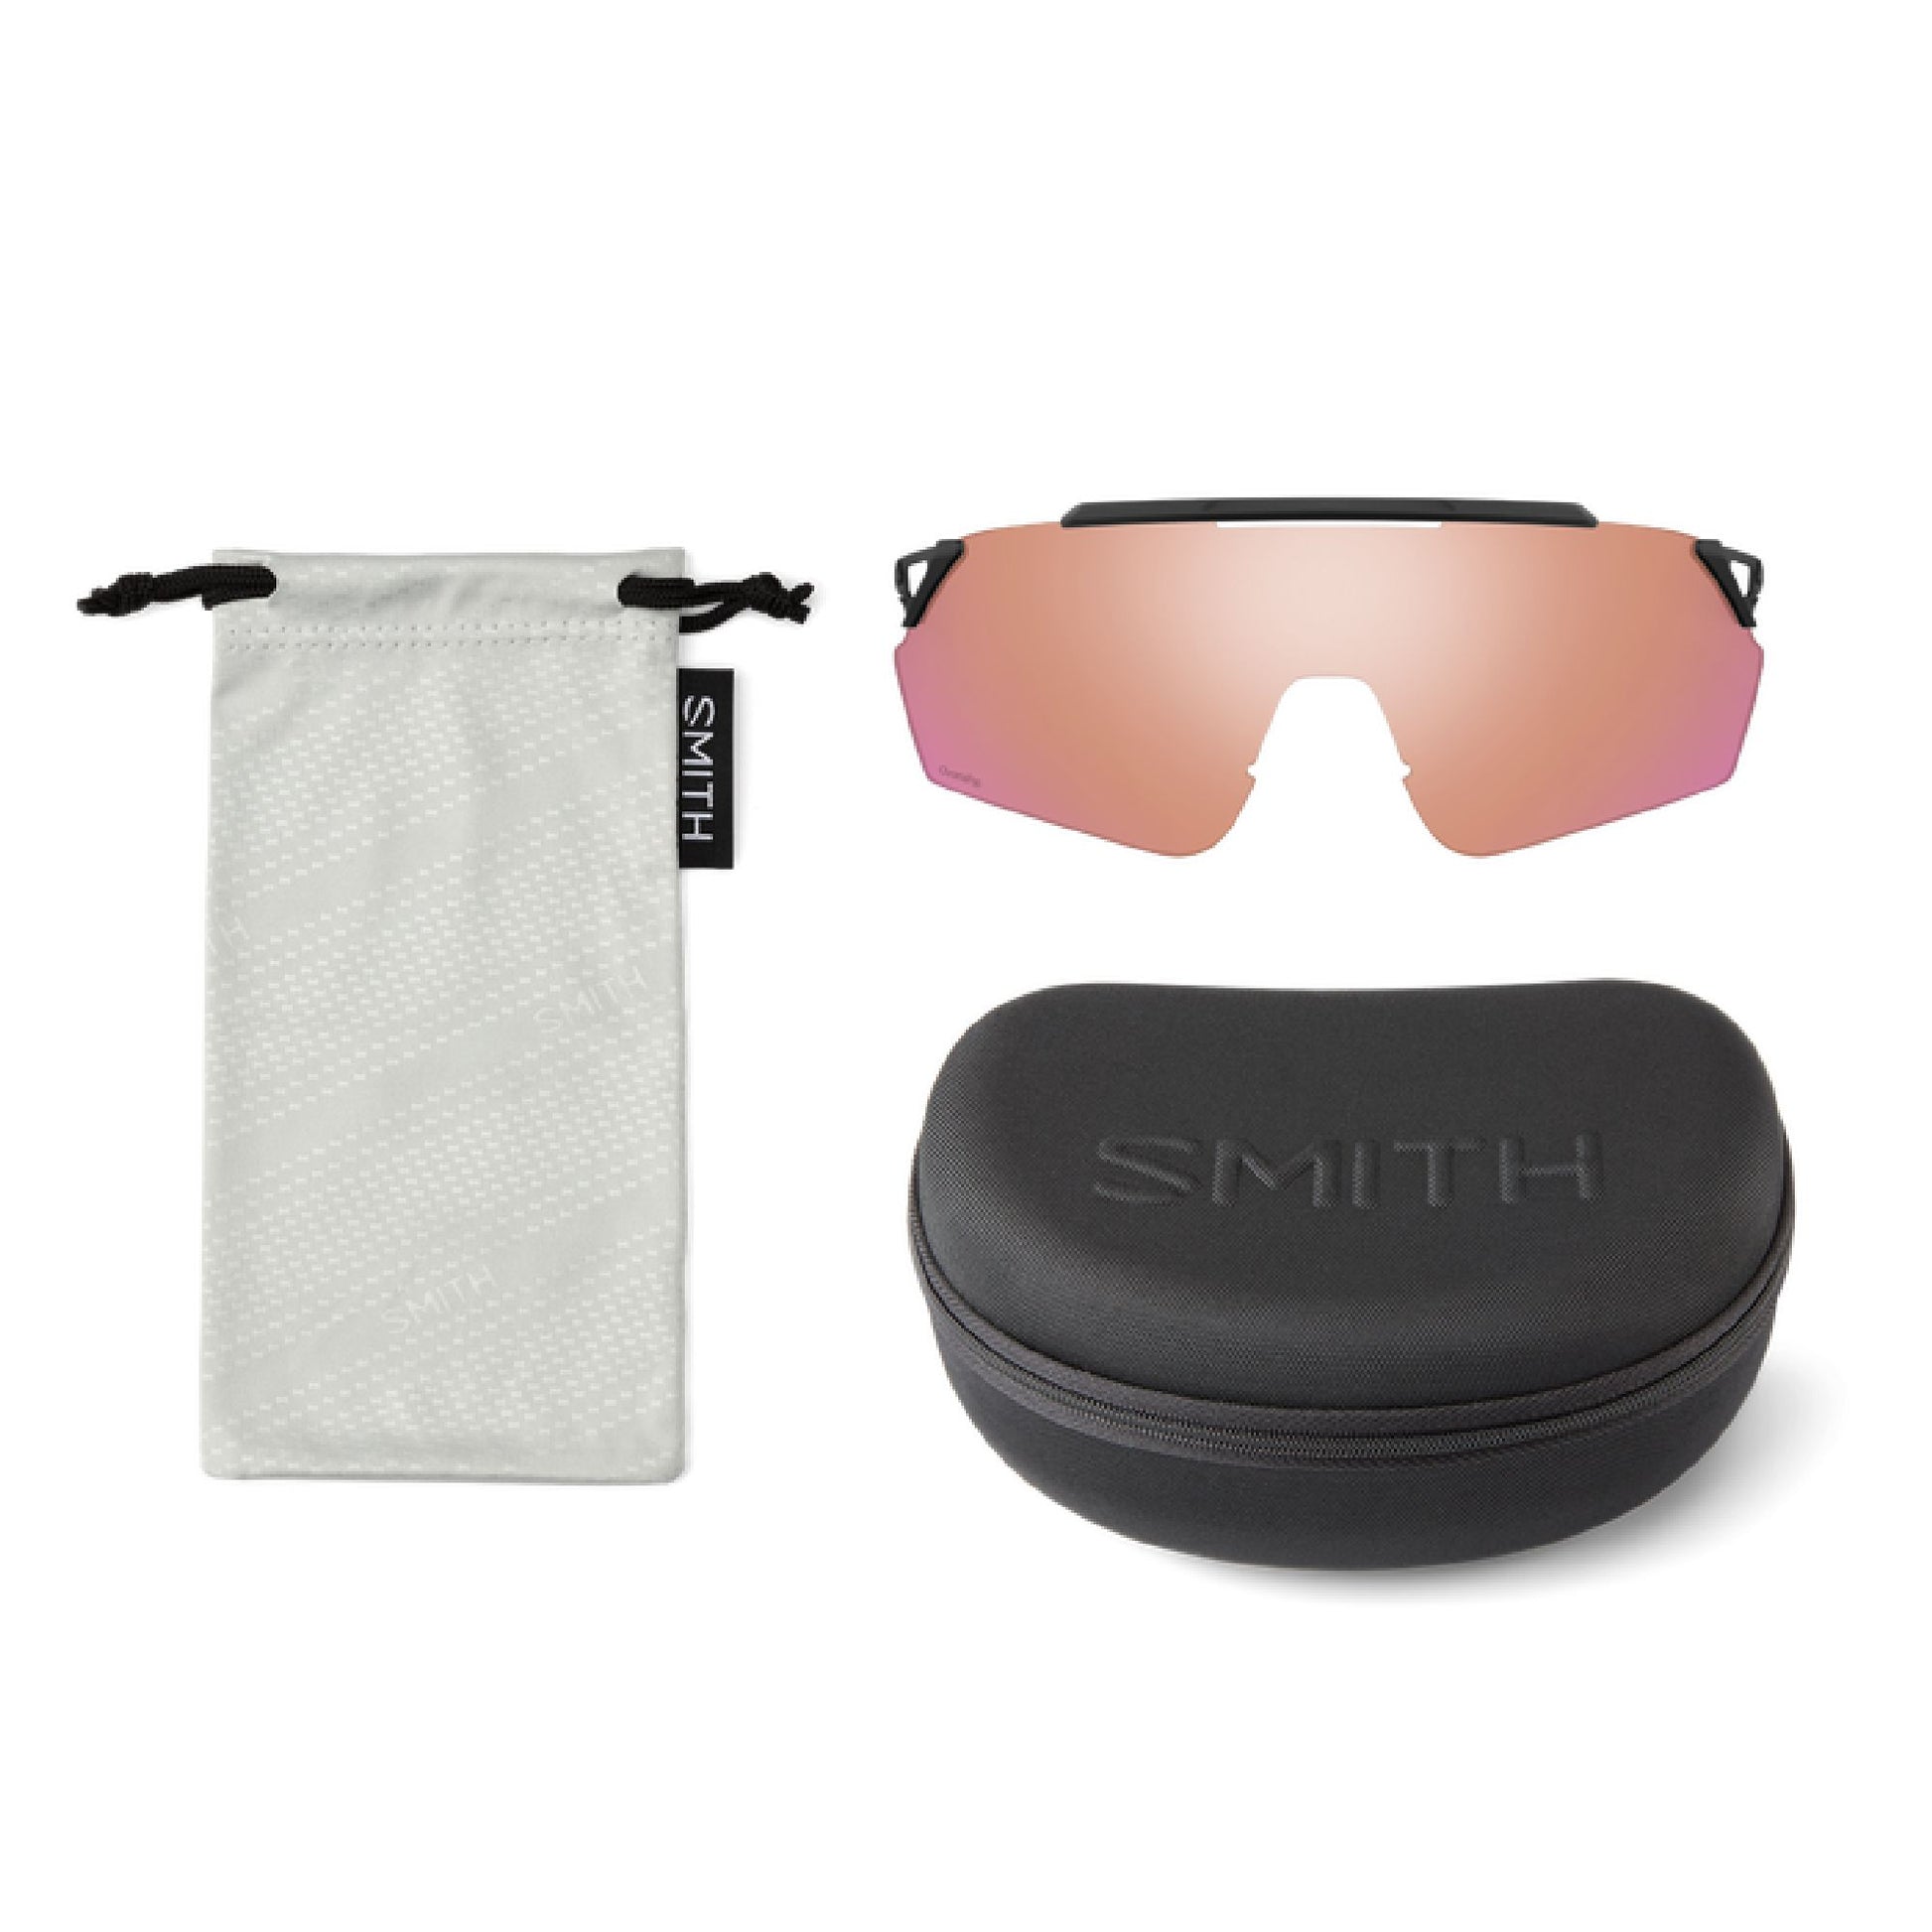 Smith Ruckus Sunglasses Matte Black / ChromaPop Black Lens Sunglasses